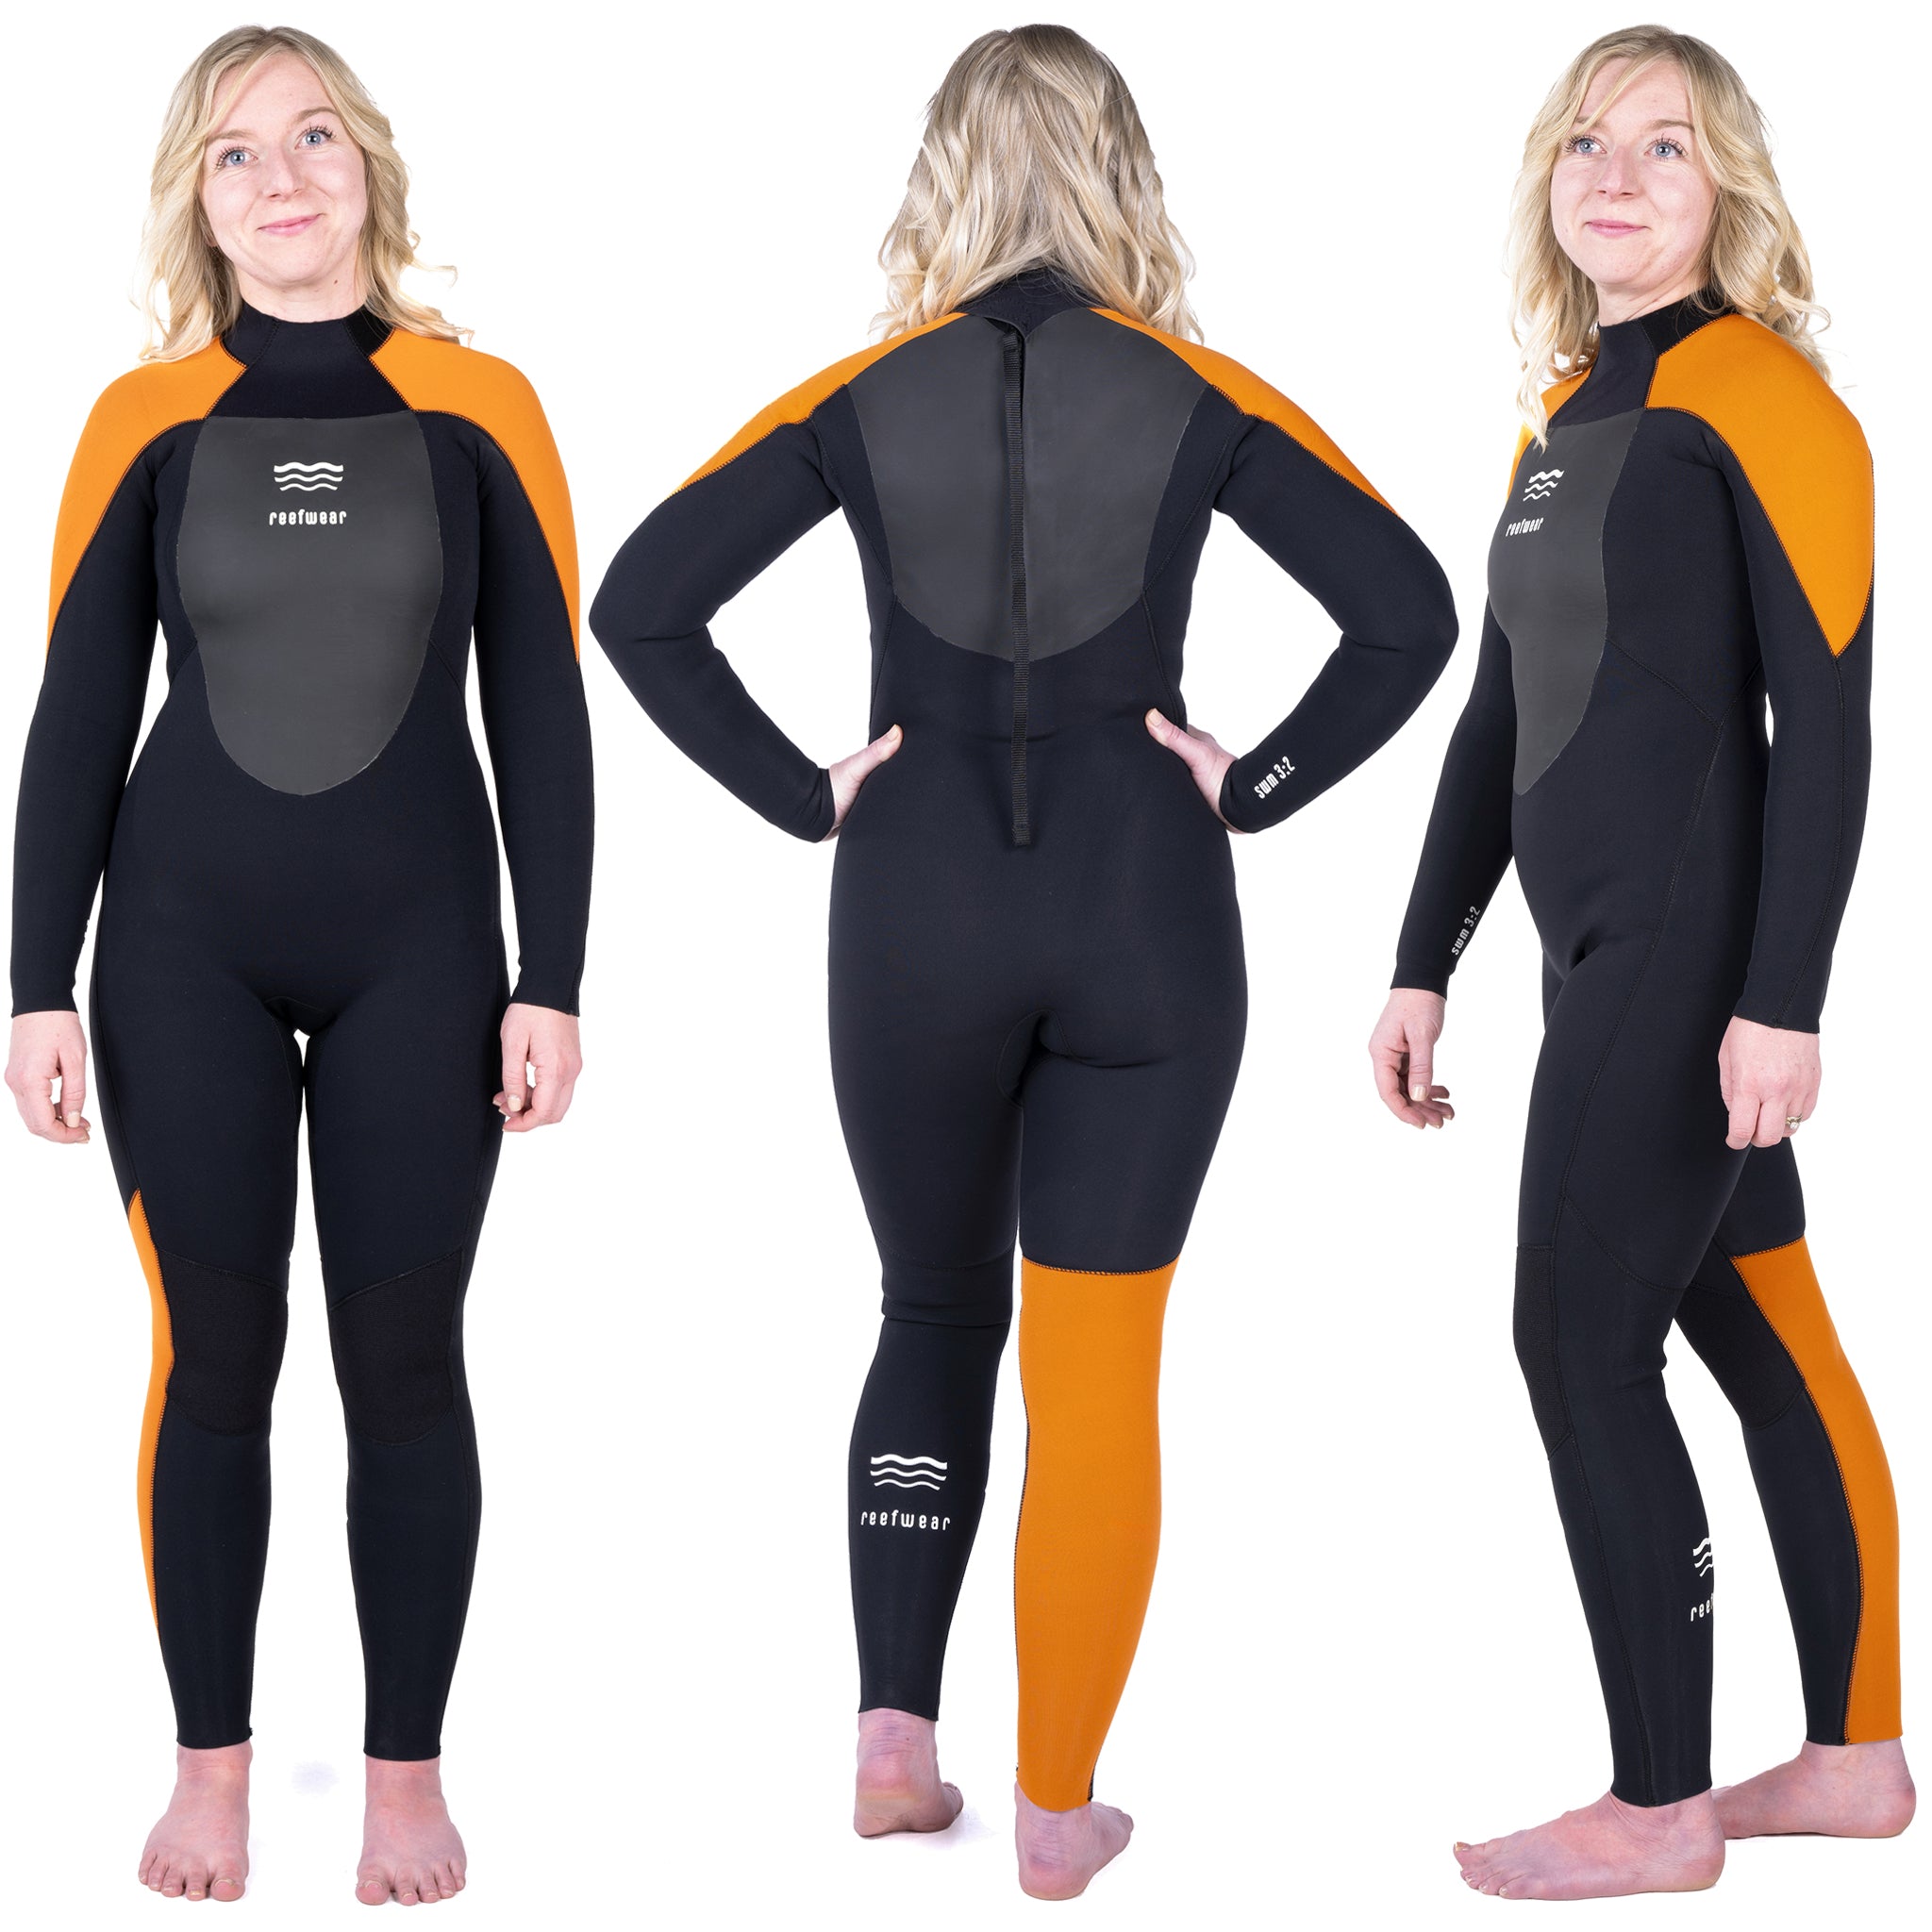 Reefwear SWM 3/2mm Blindstitched Women's Swim Wetsuit | Front, Back & Side views